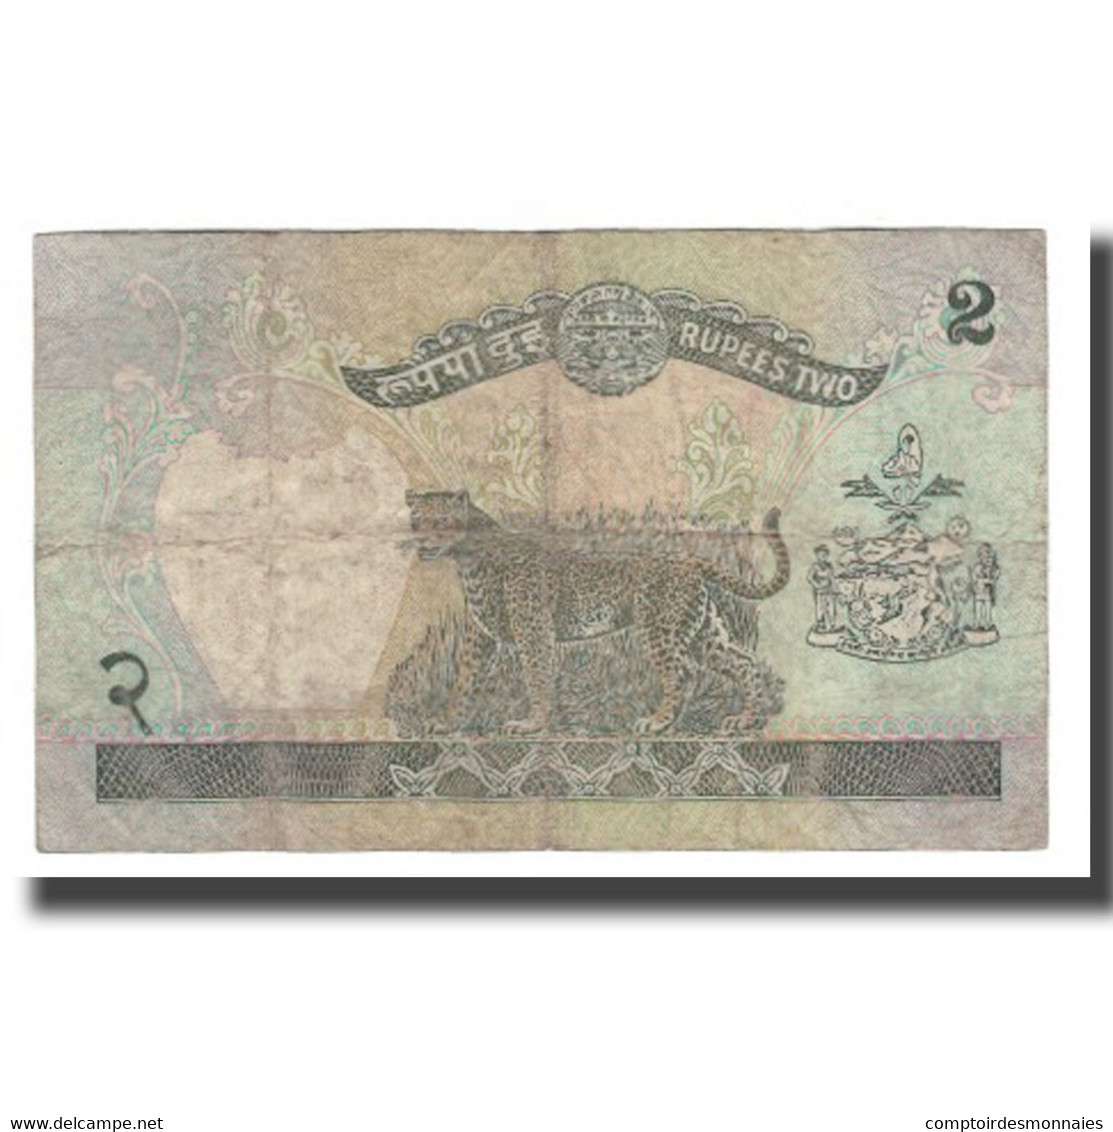 Billet, Népal, 2 Rupees, KM:29a, TB+ - Népal